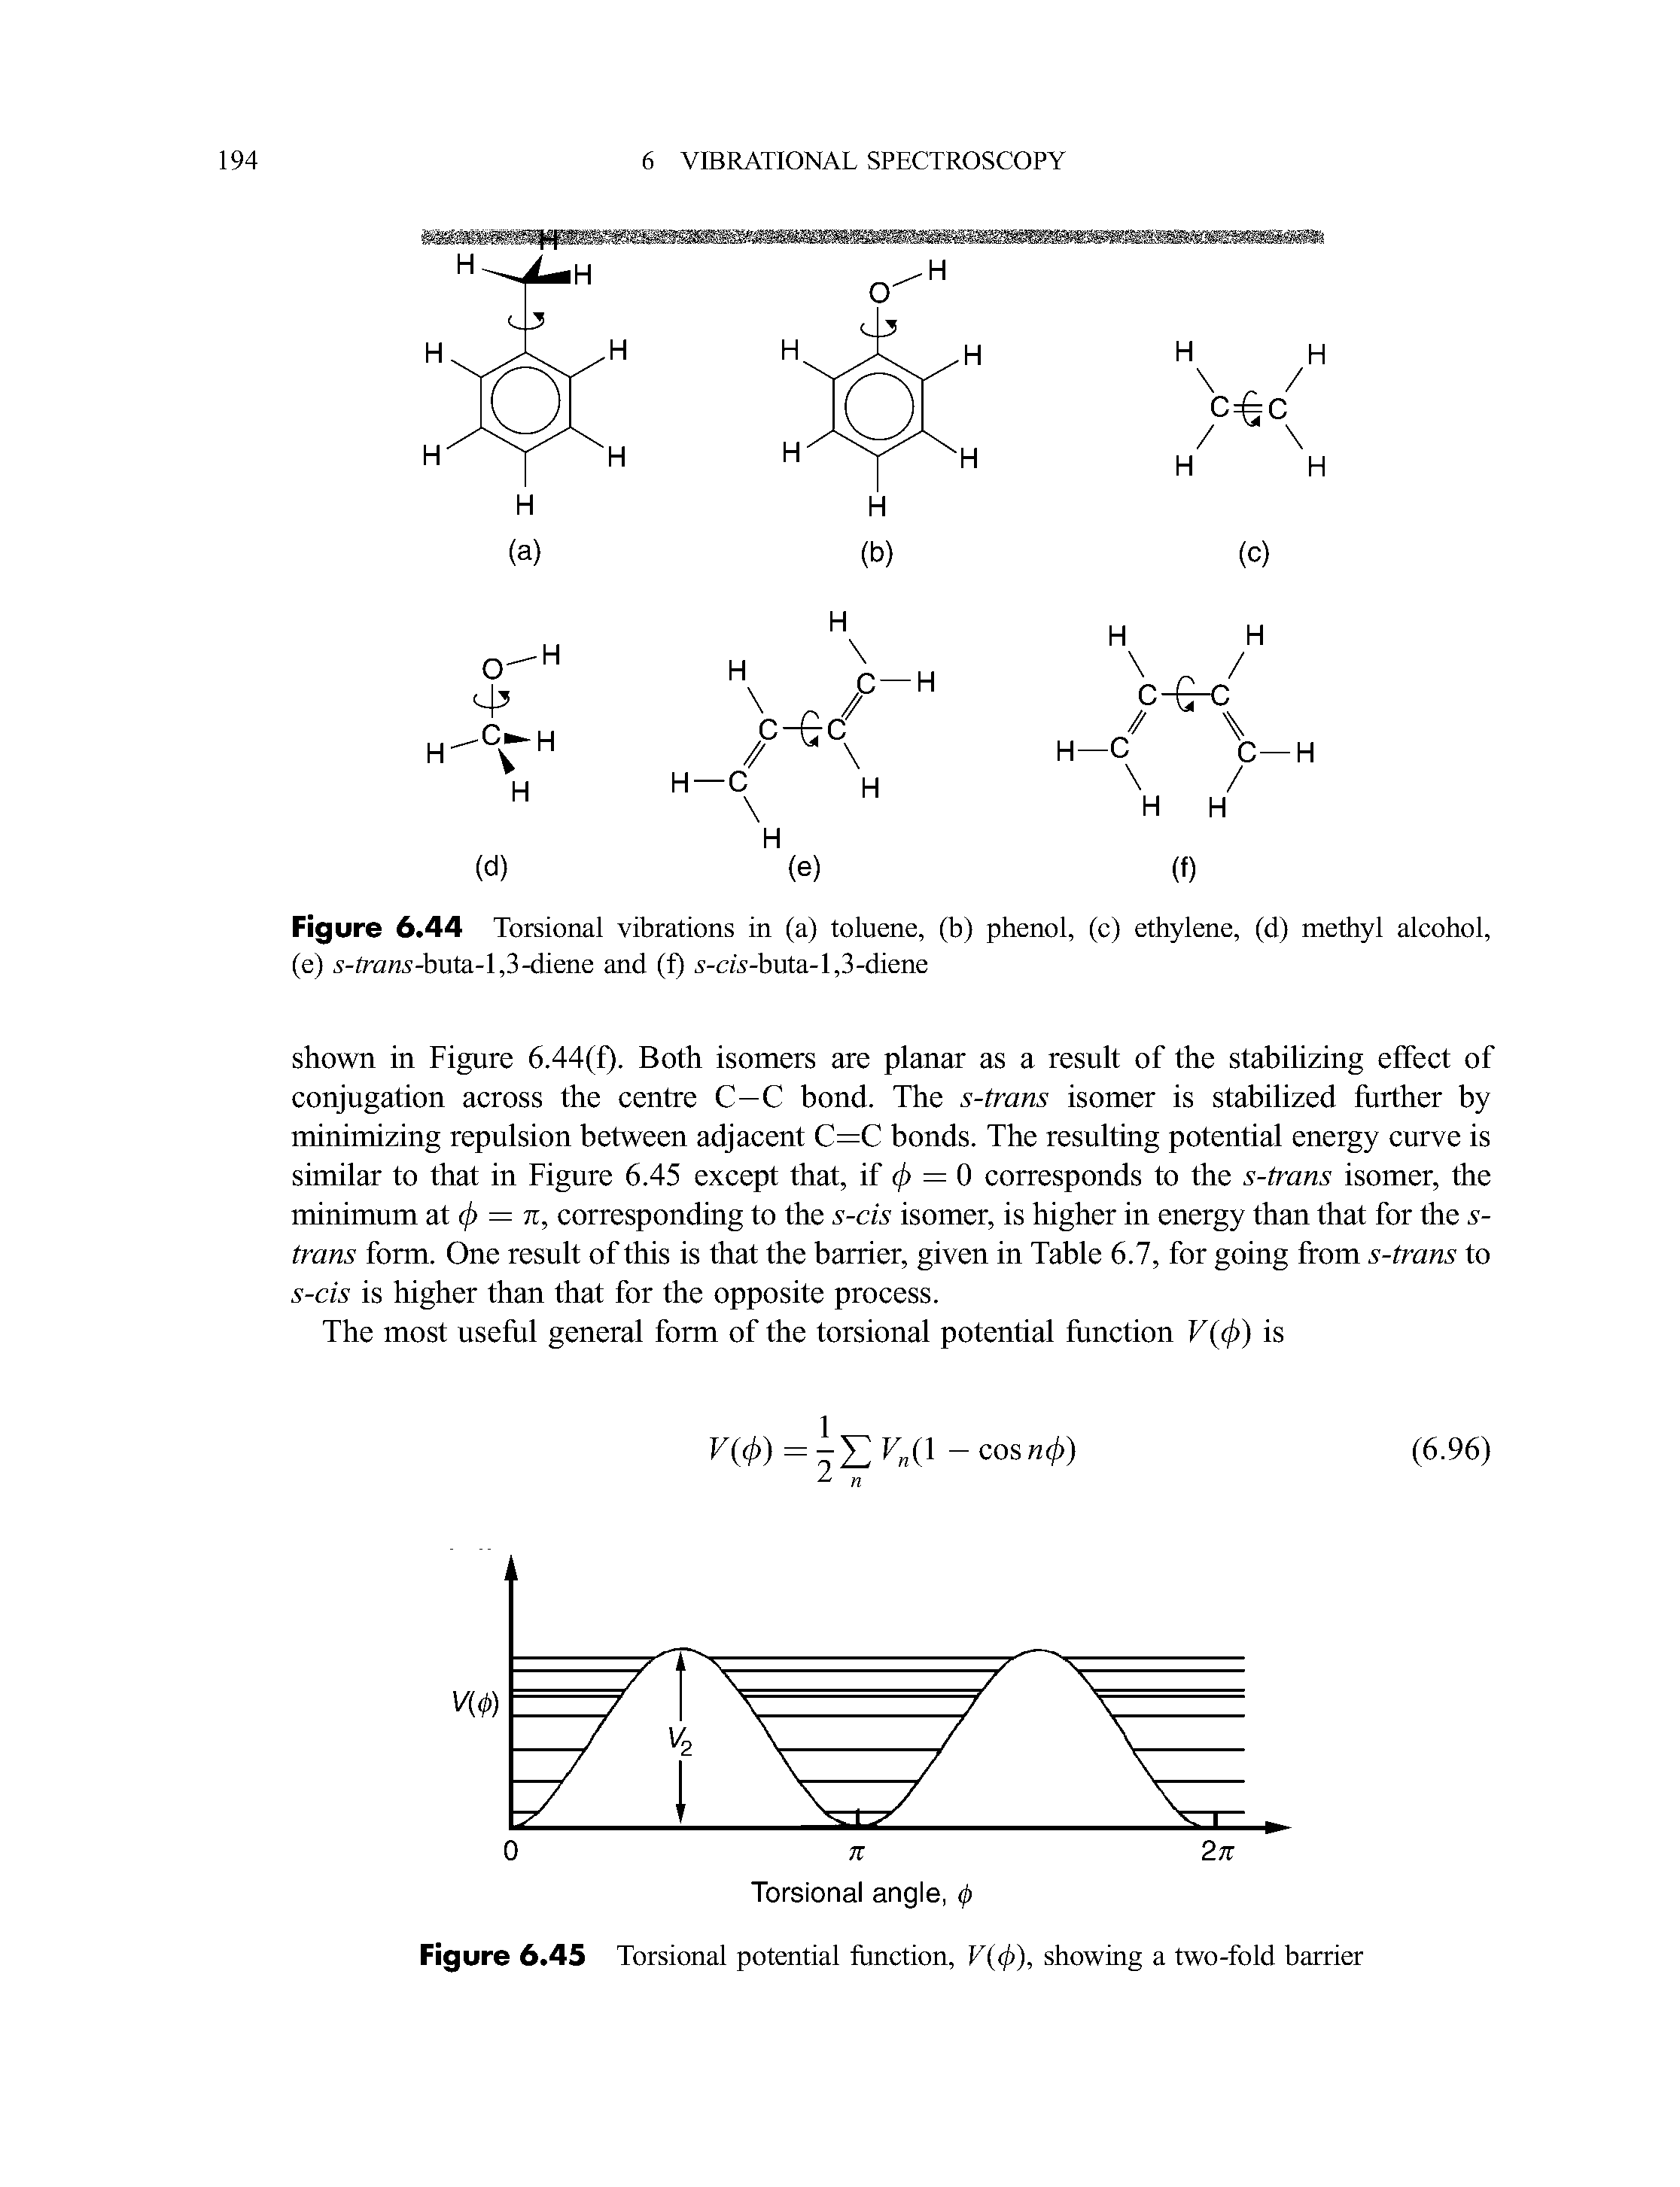 Figure 6.44 Torsional vibrations in (a) toluene, (b) phenol, (c) ethylene, (d) methyl alcohol, (e) s-lraws-buta-l,3-diene and (1) s-cis-buta-l,3-diene...